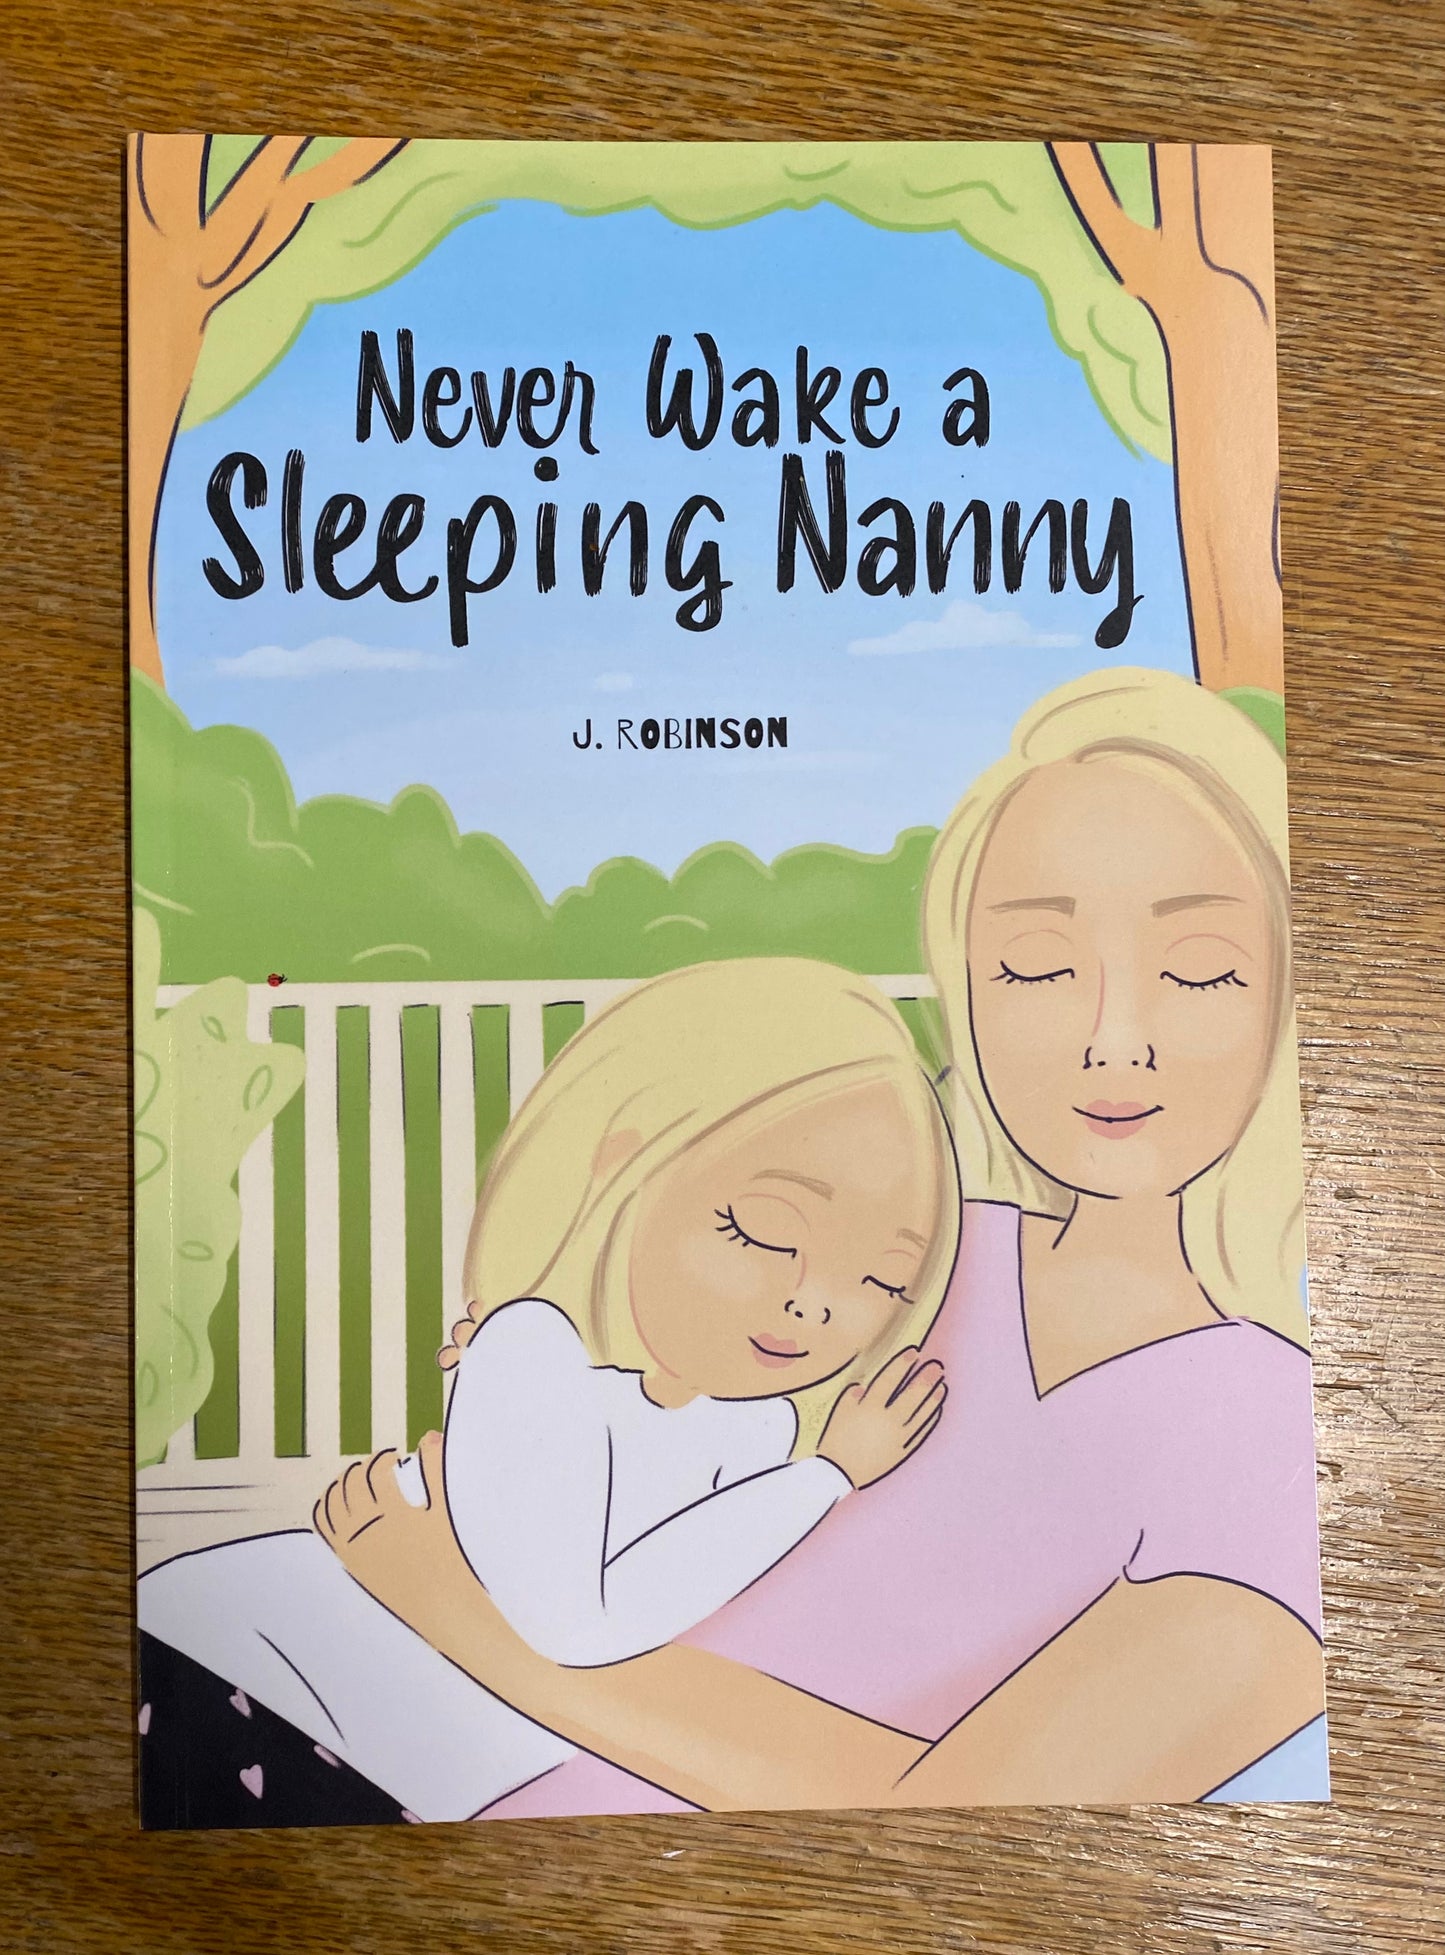 "Never Wake a Sleeping Nanny"